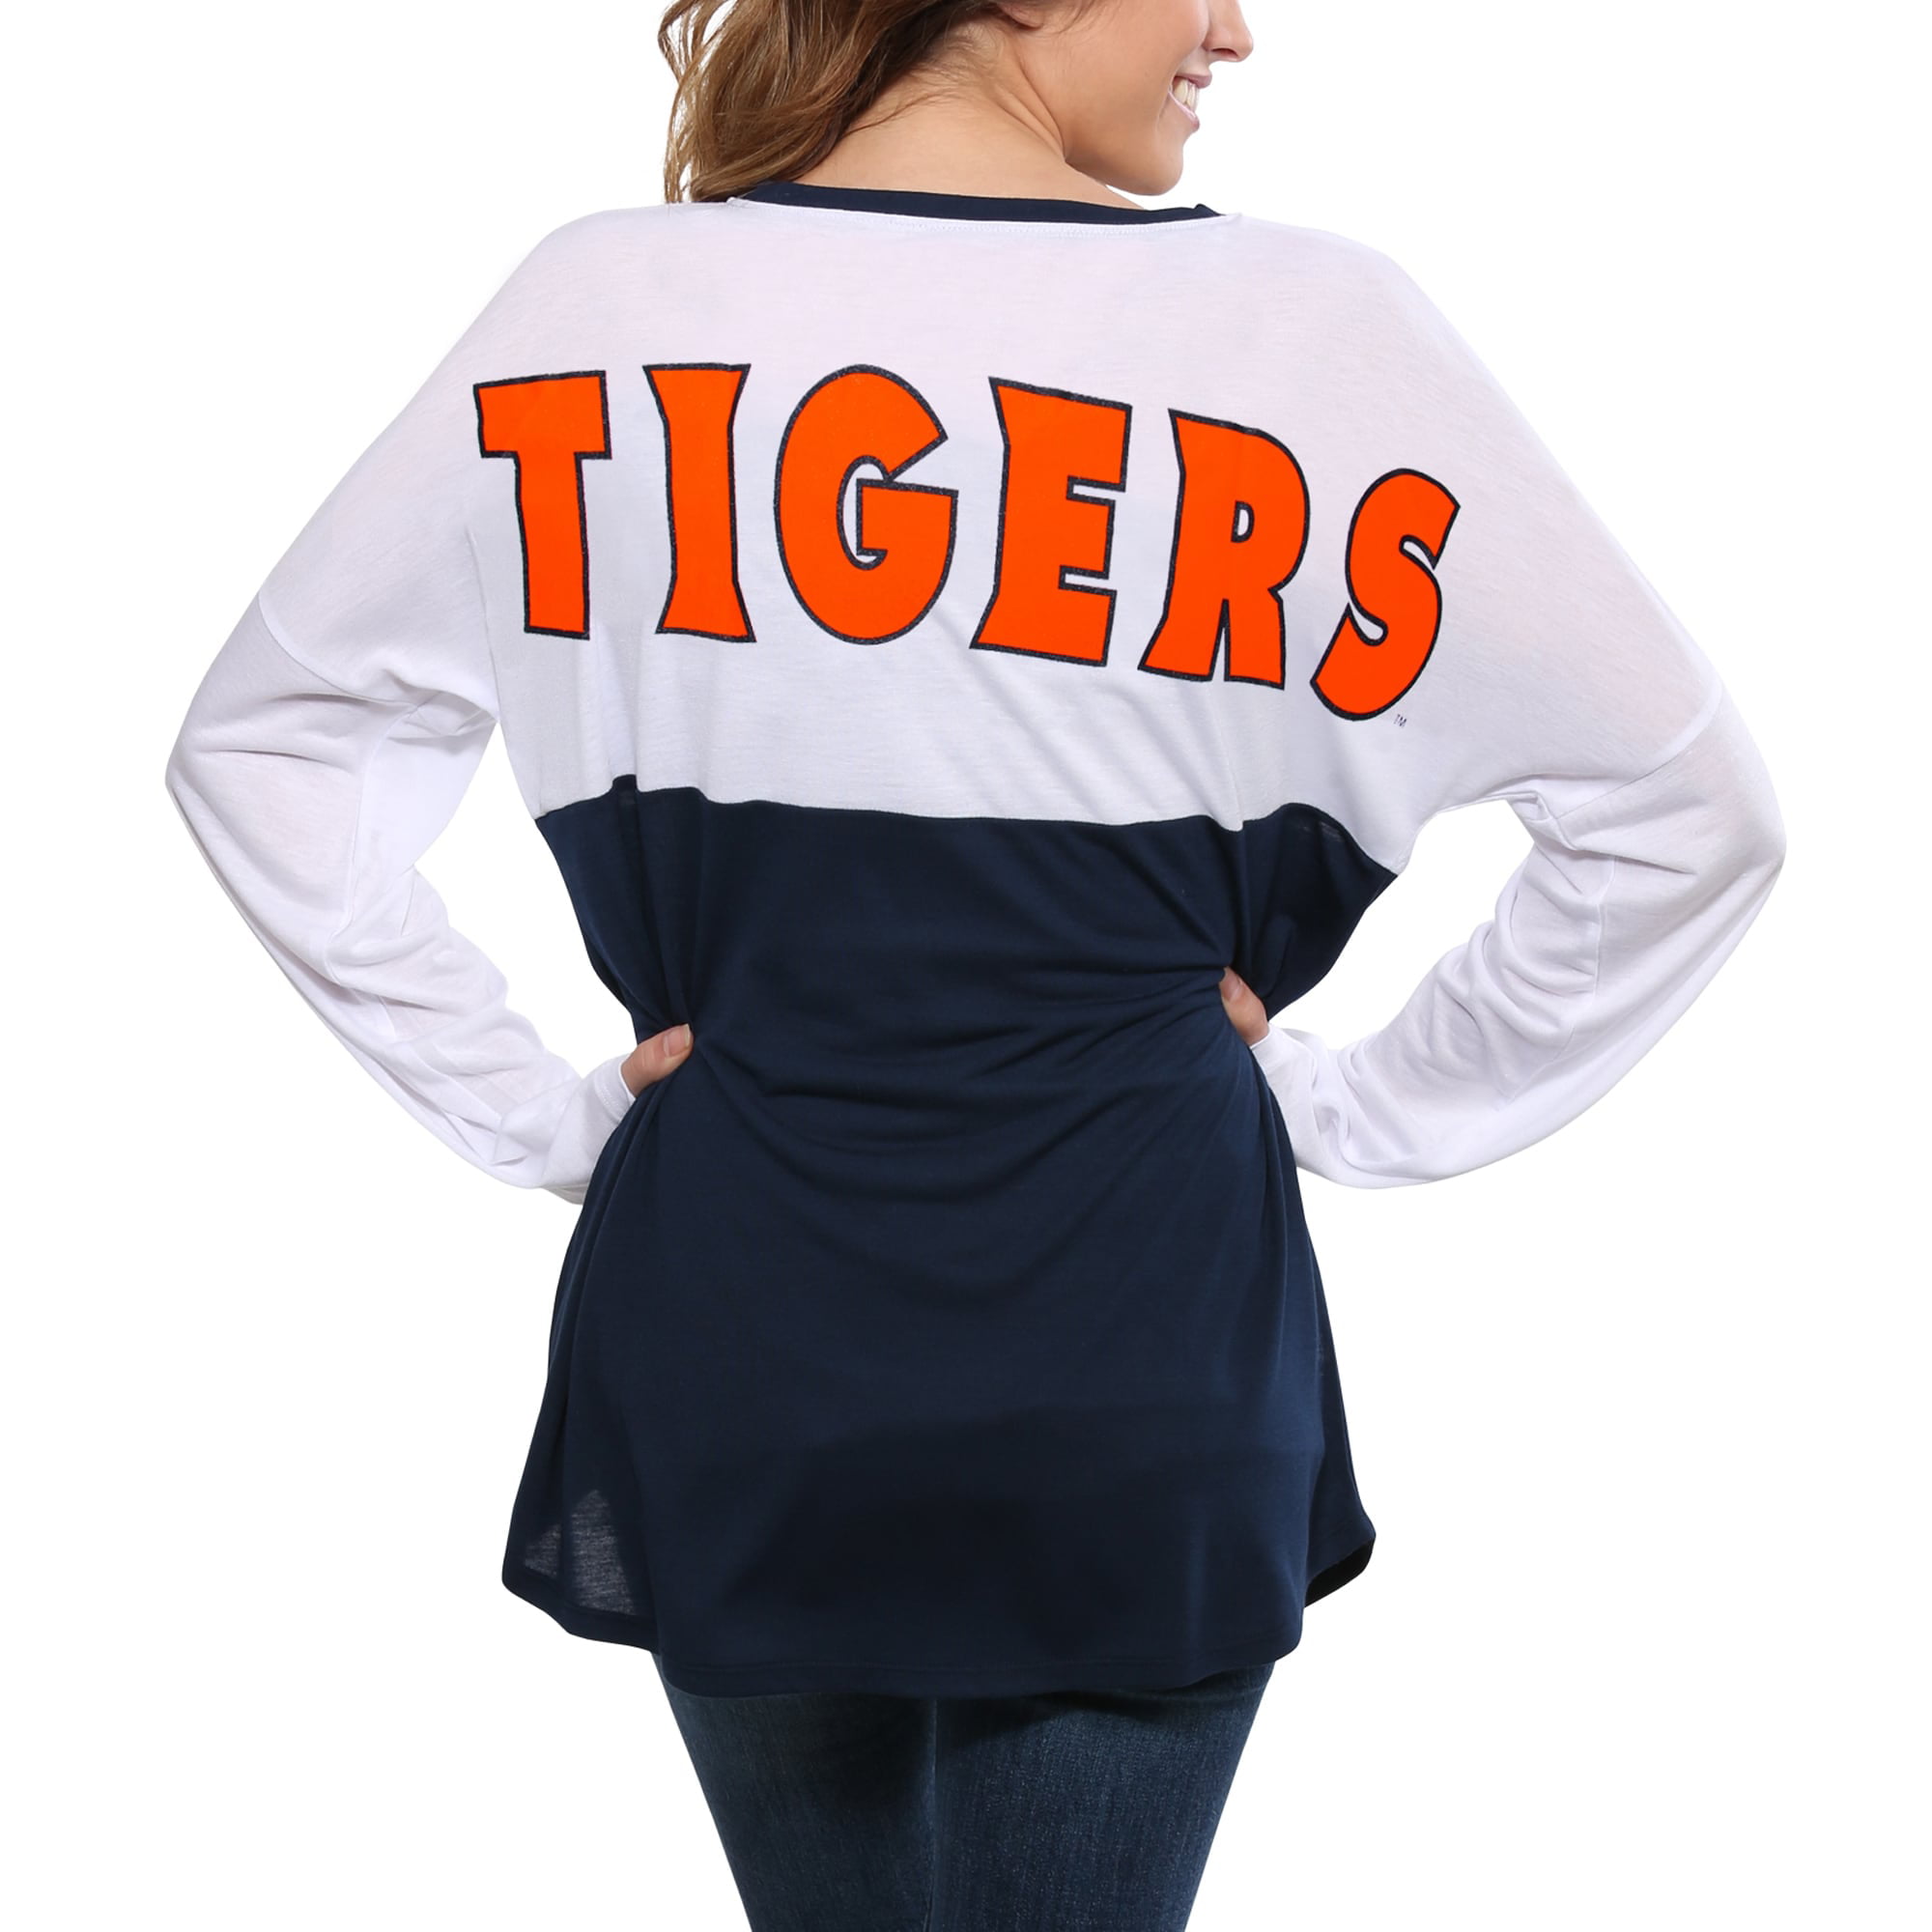 detroit tigers t shirt women's